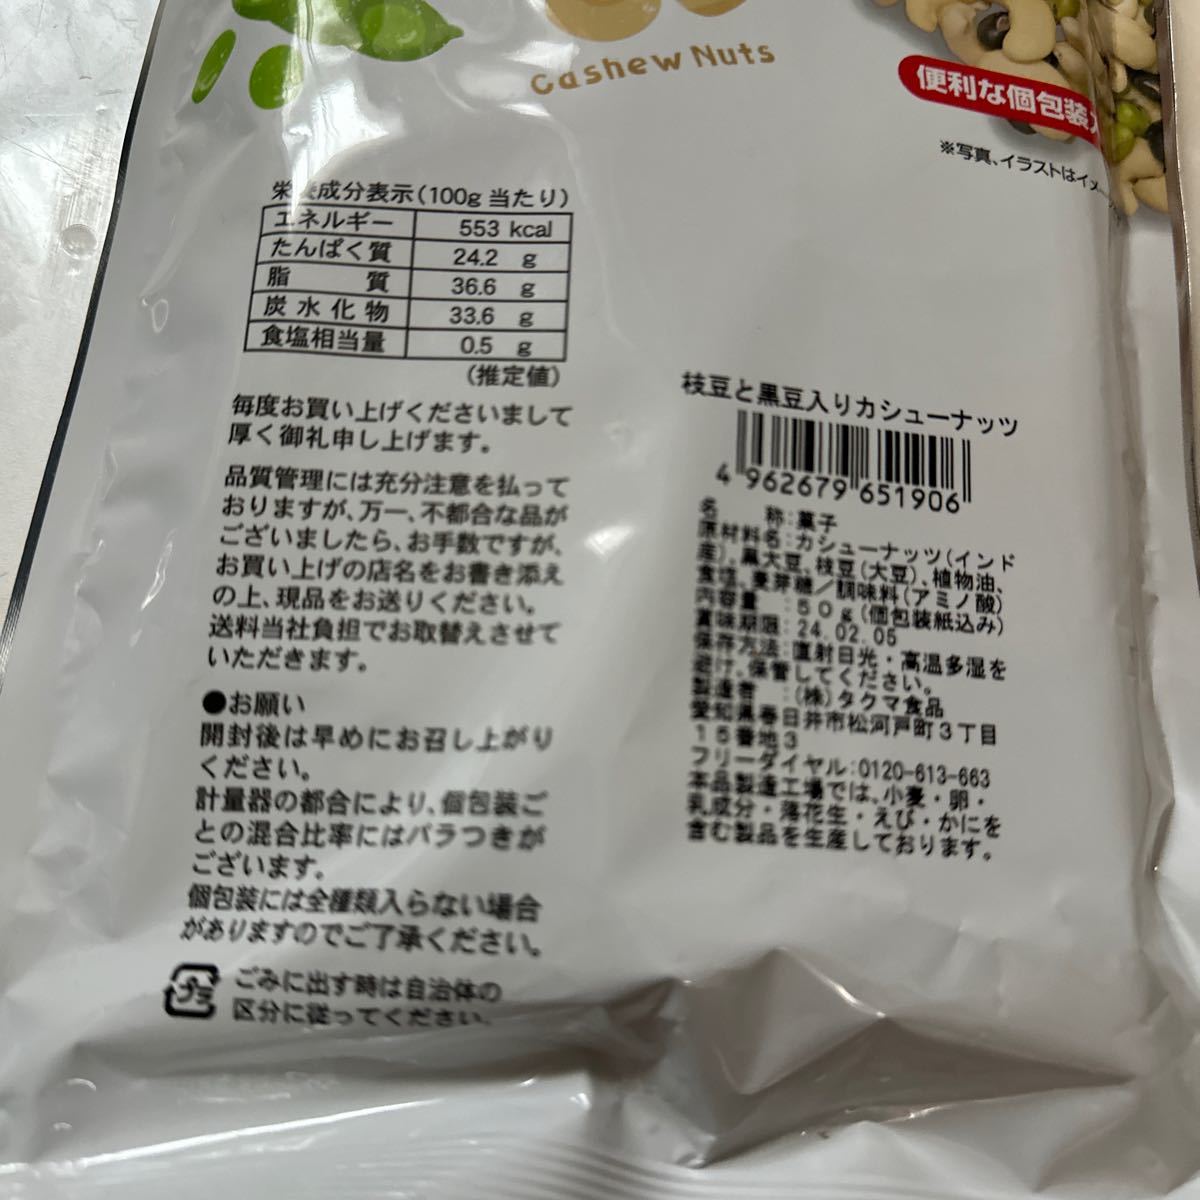  Hokkaido green ..450g×2 sack extra attaching 